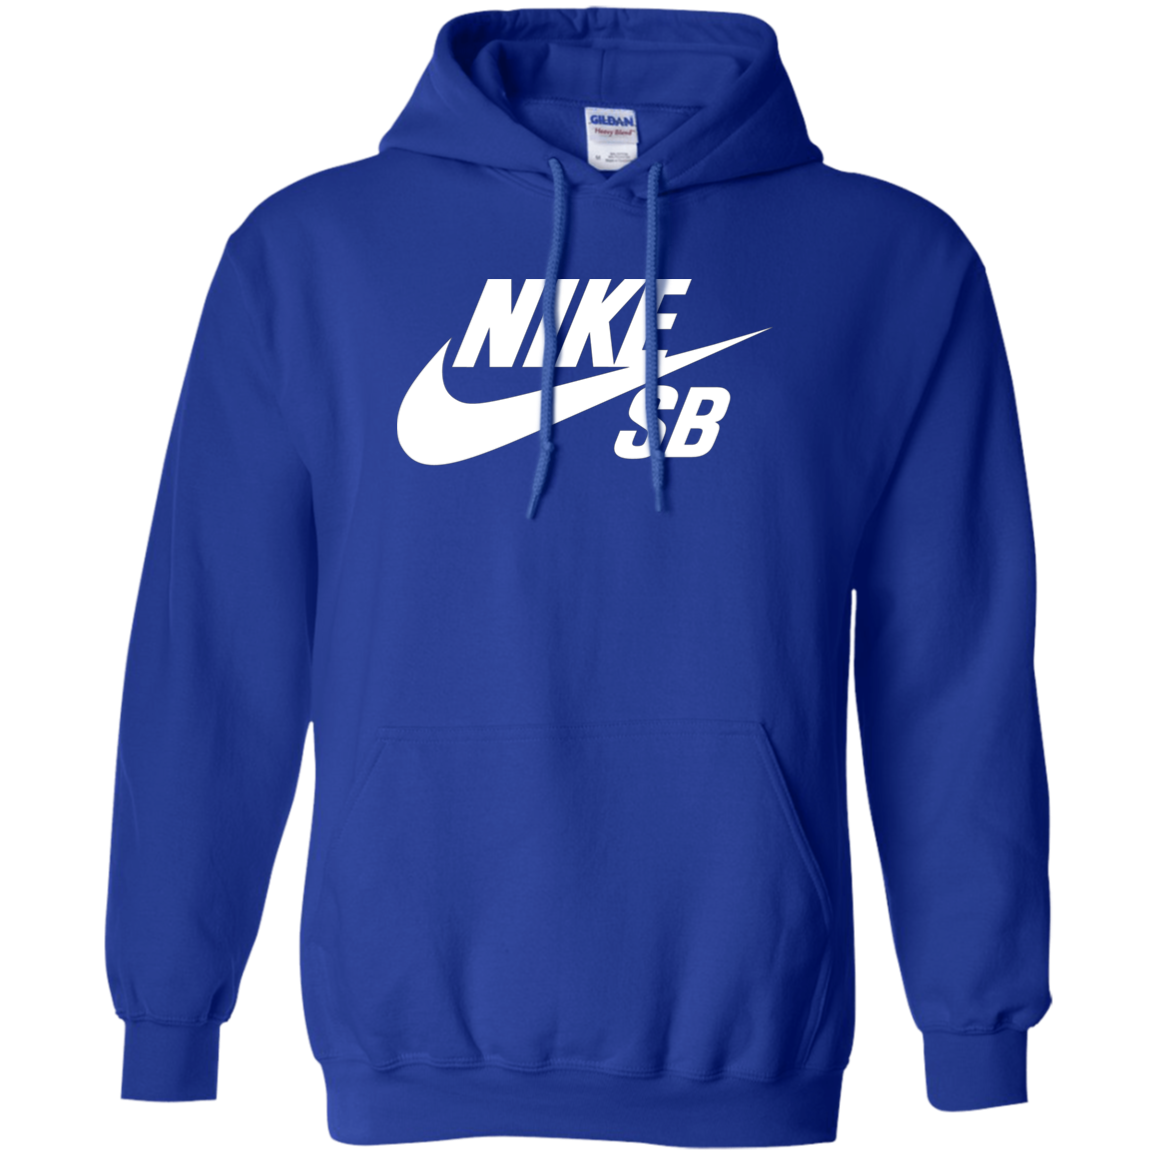 Sale > light blue nike sb hoodie > in stock